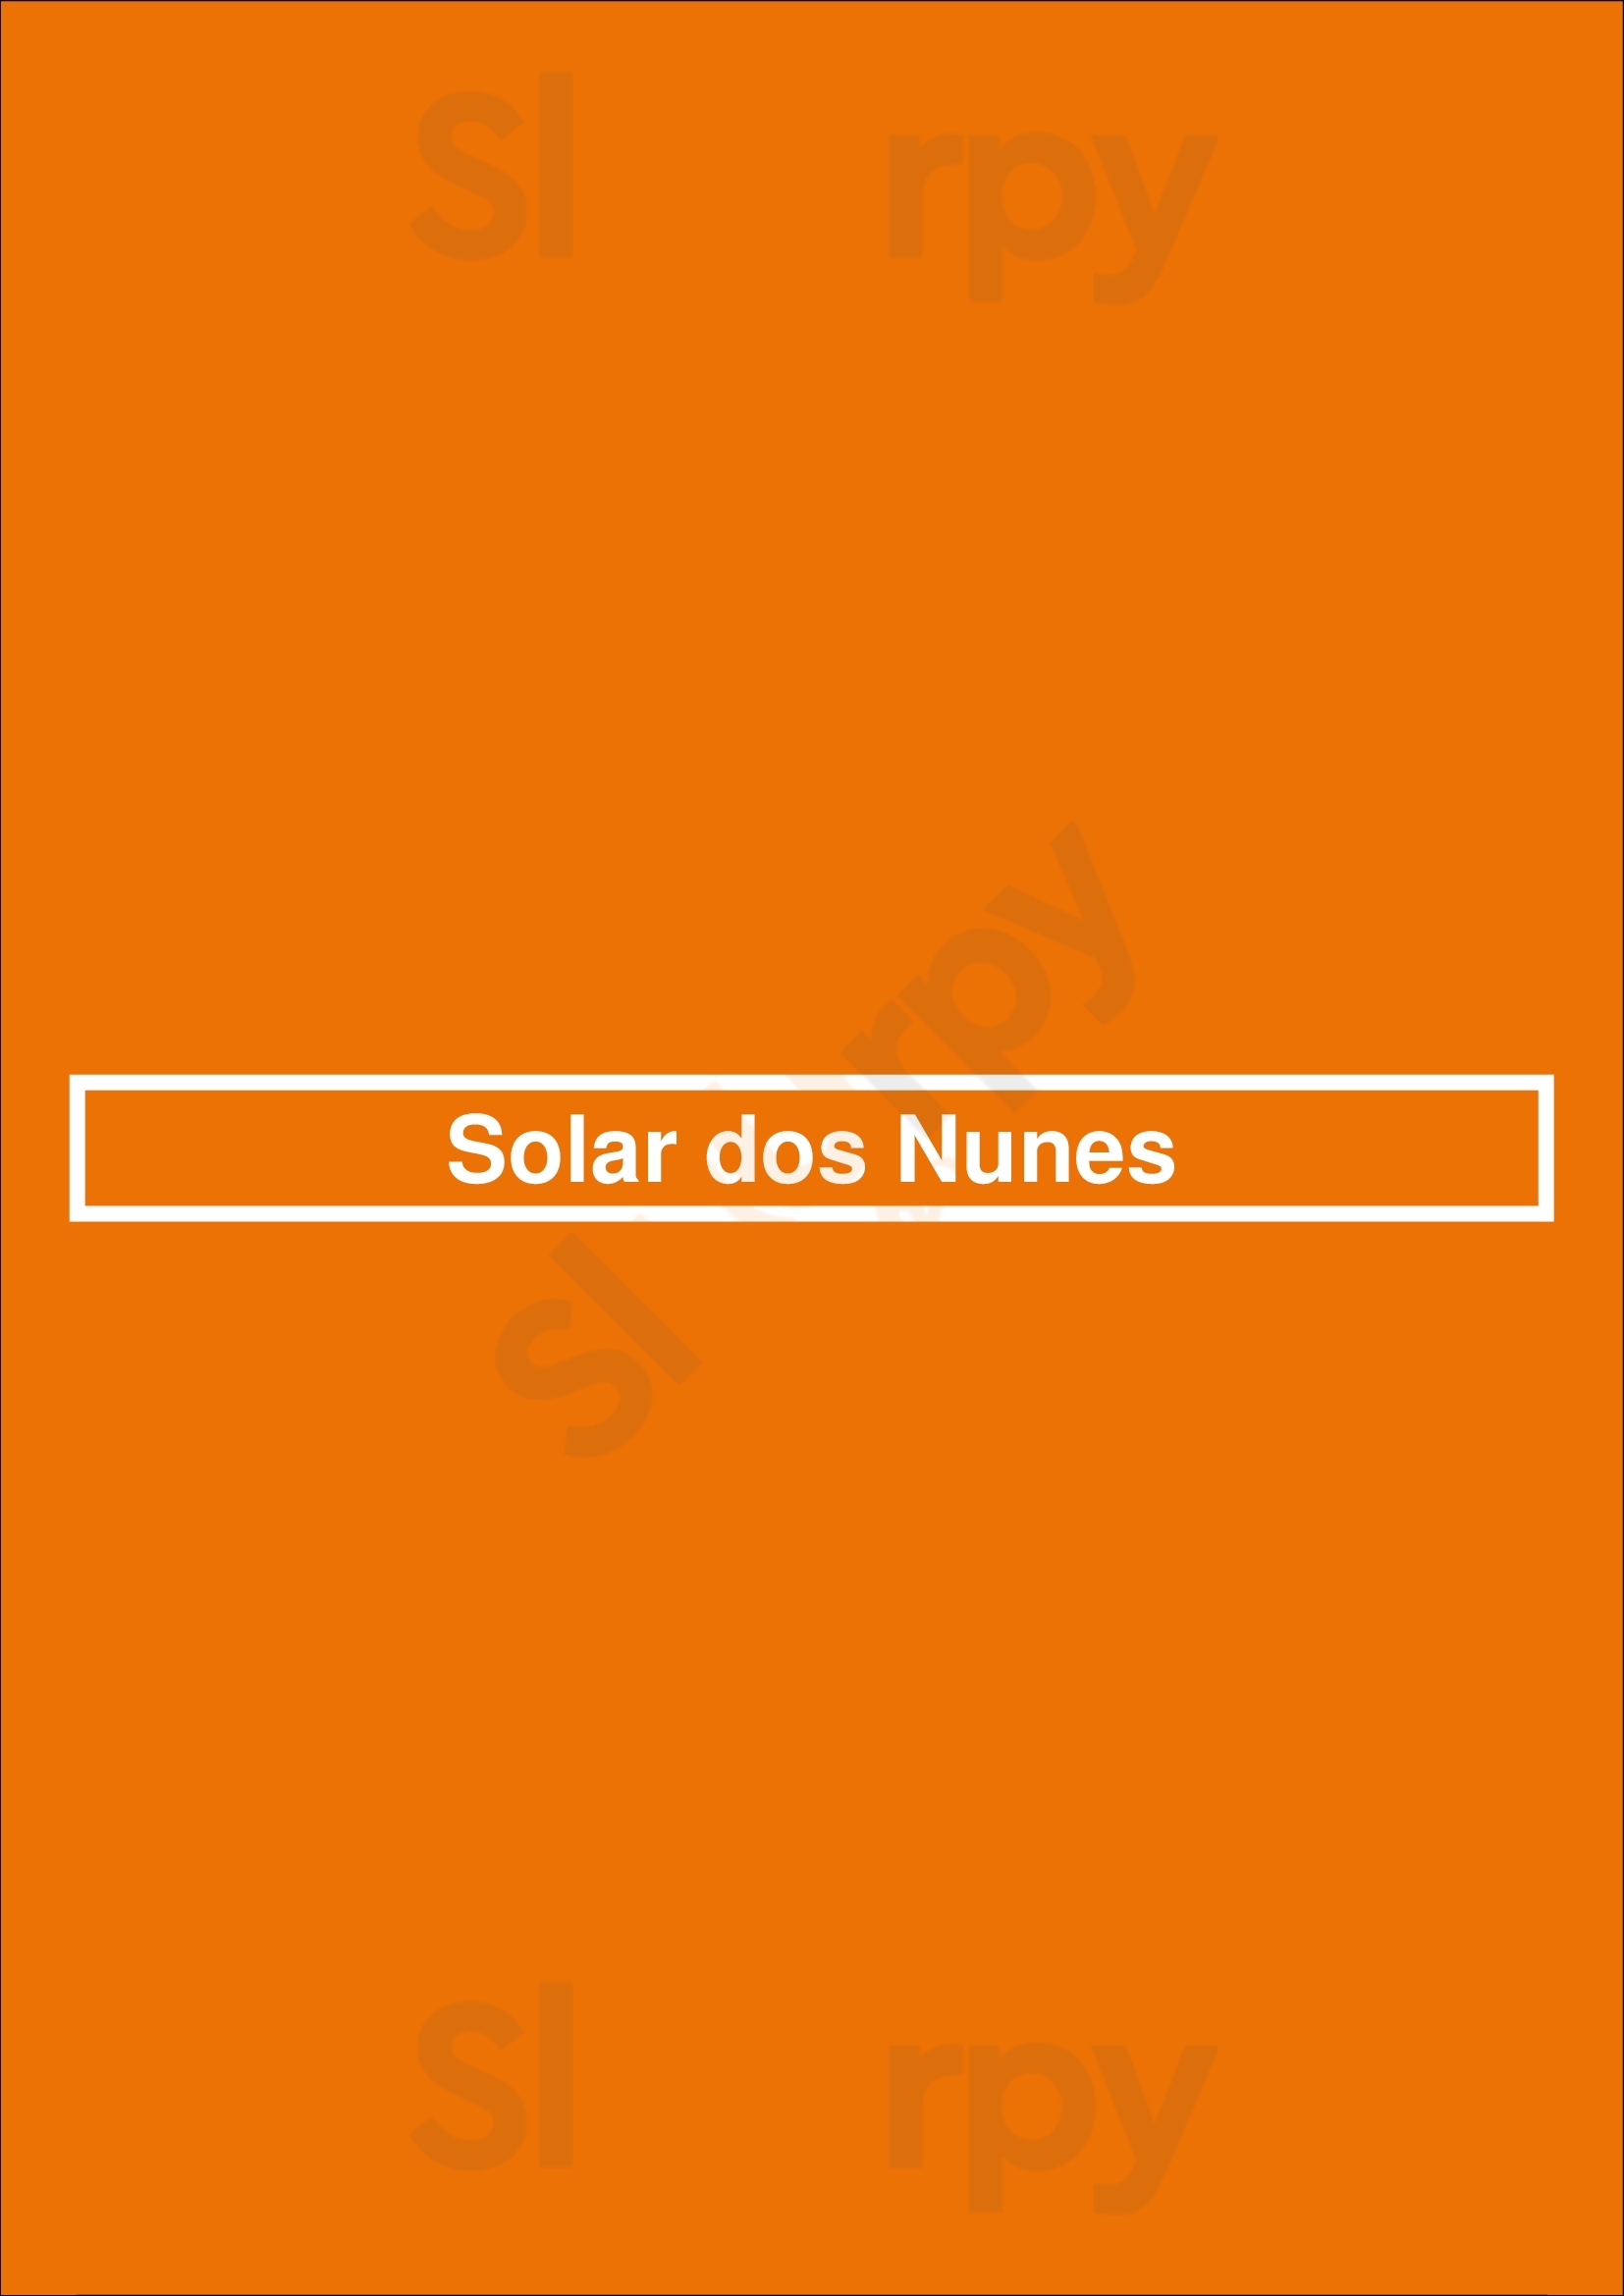 Solar Dos Nunes Lisboa Menu - 1